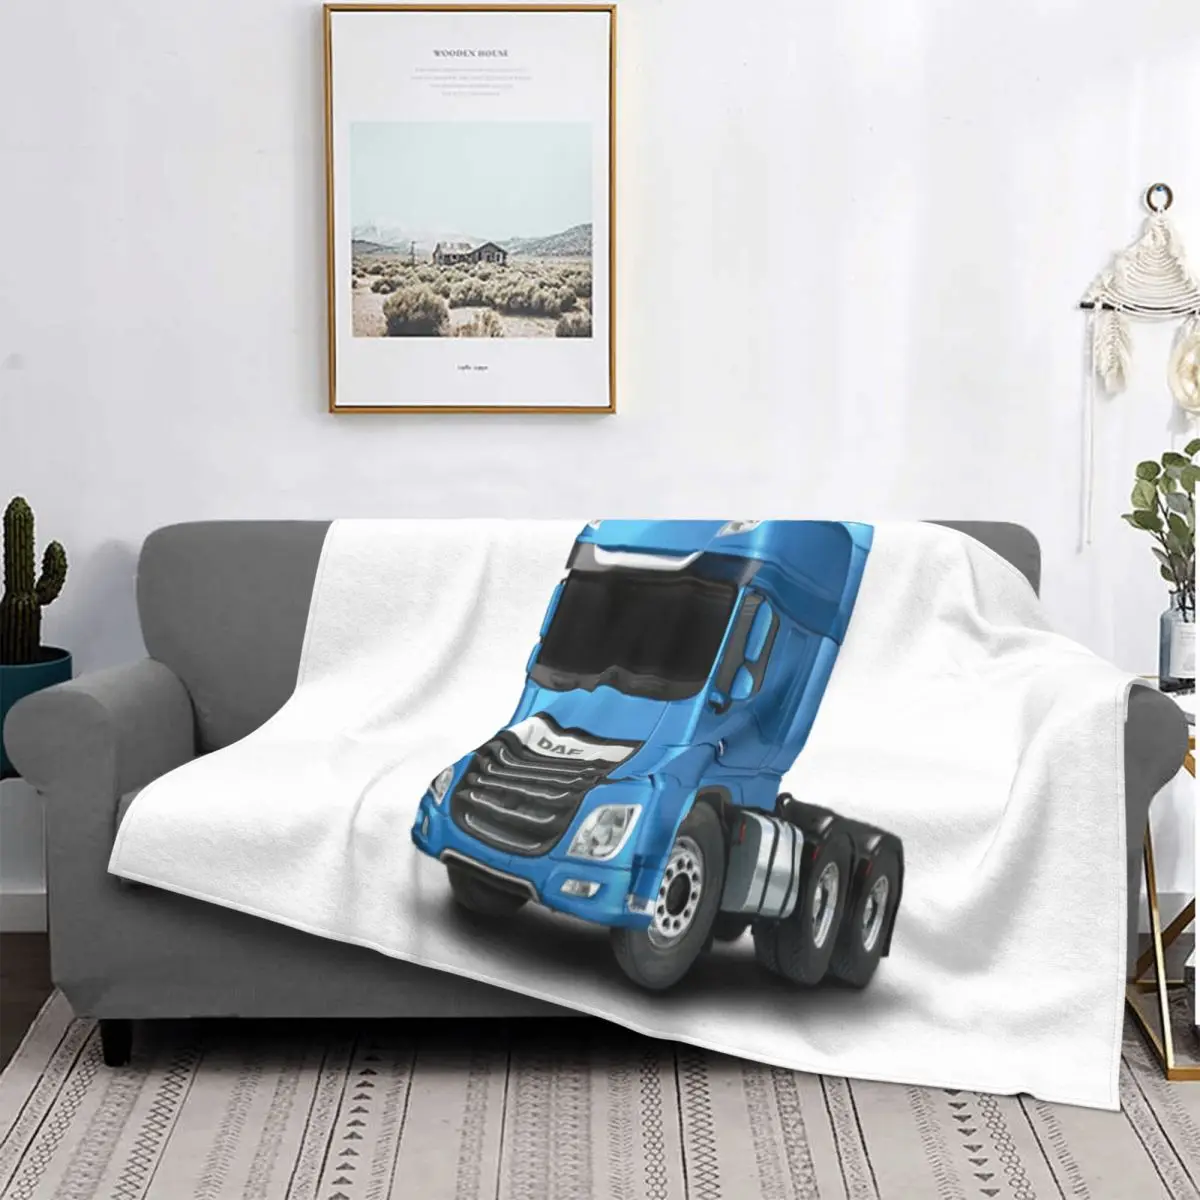 

Daf Xf Summer Quilts Large Bedspread On The Sofa Plush Home Textile Luxury Designer Blanket Carpet Bowsette Flannel Blanket